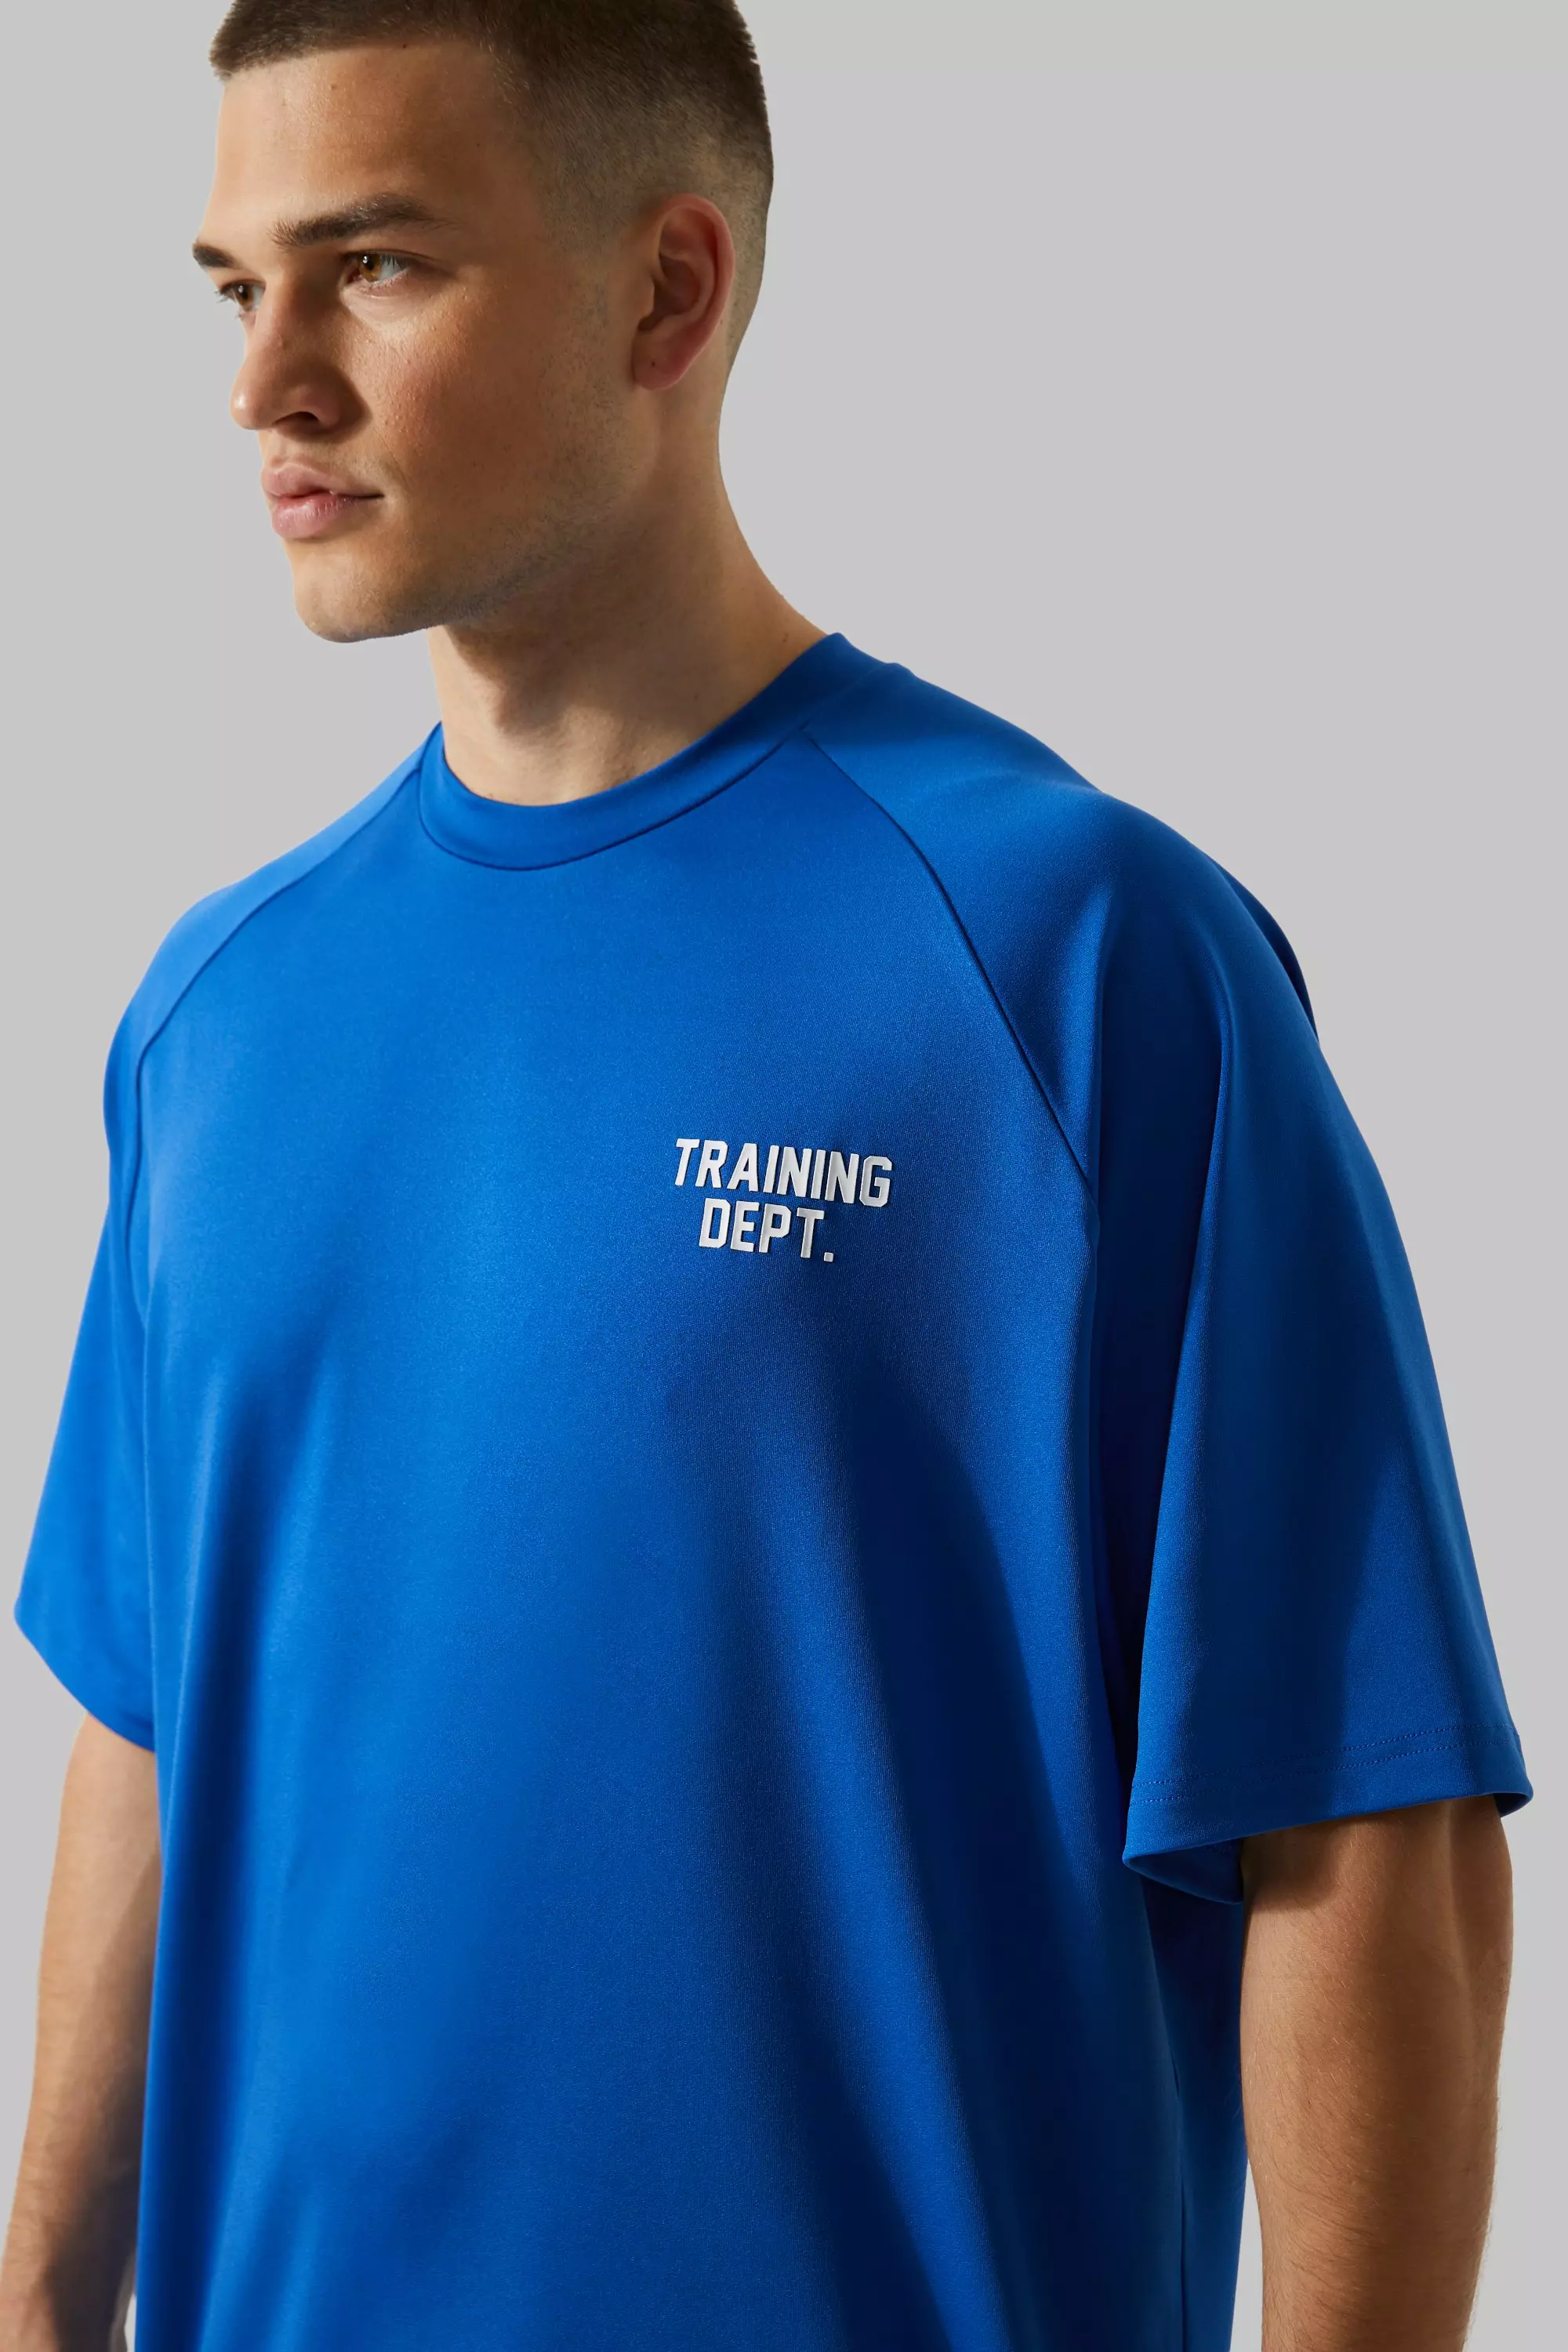 Training Dept. T-Shirt